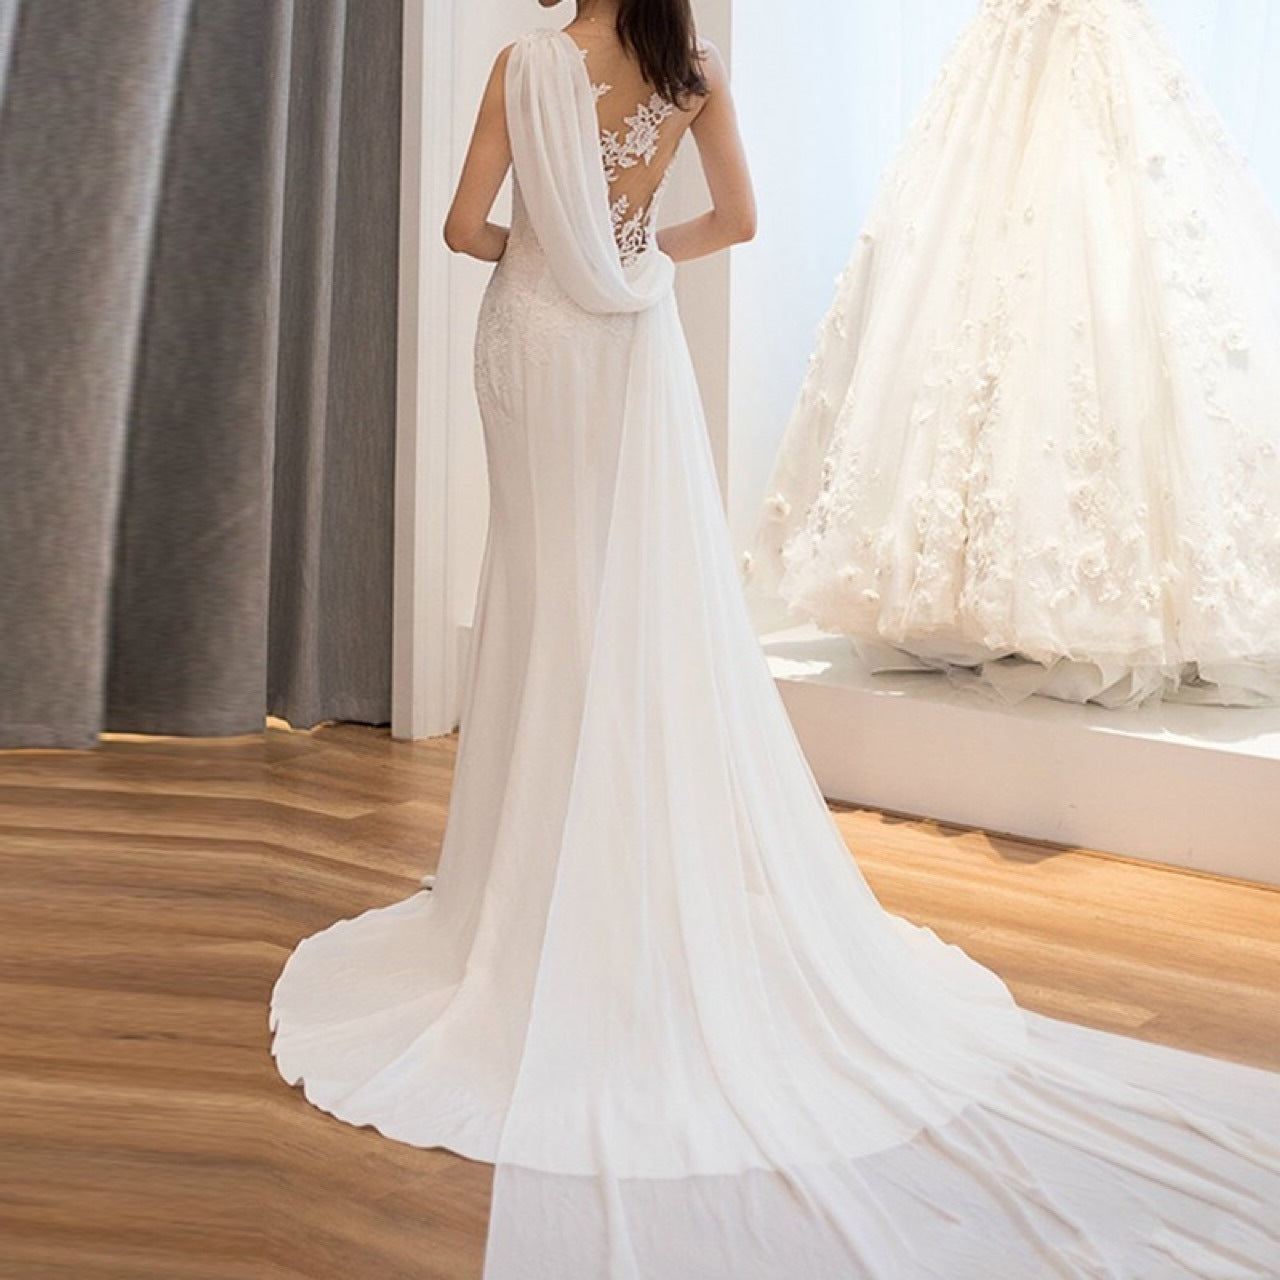 DZONN Mid-waist Dream See-through Super Fairy Light Wedding Dress